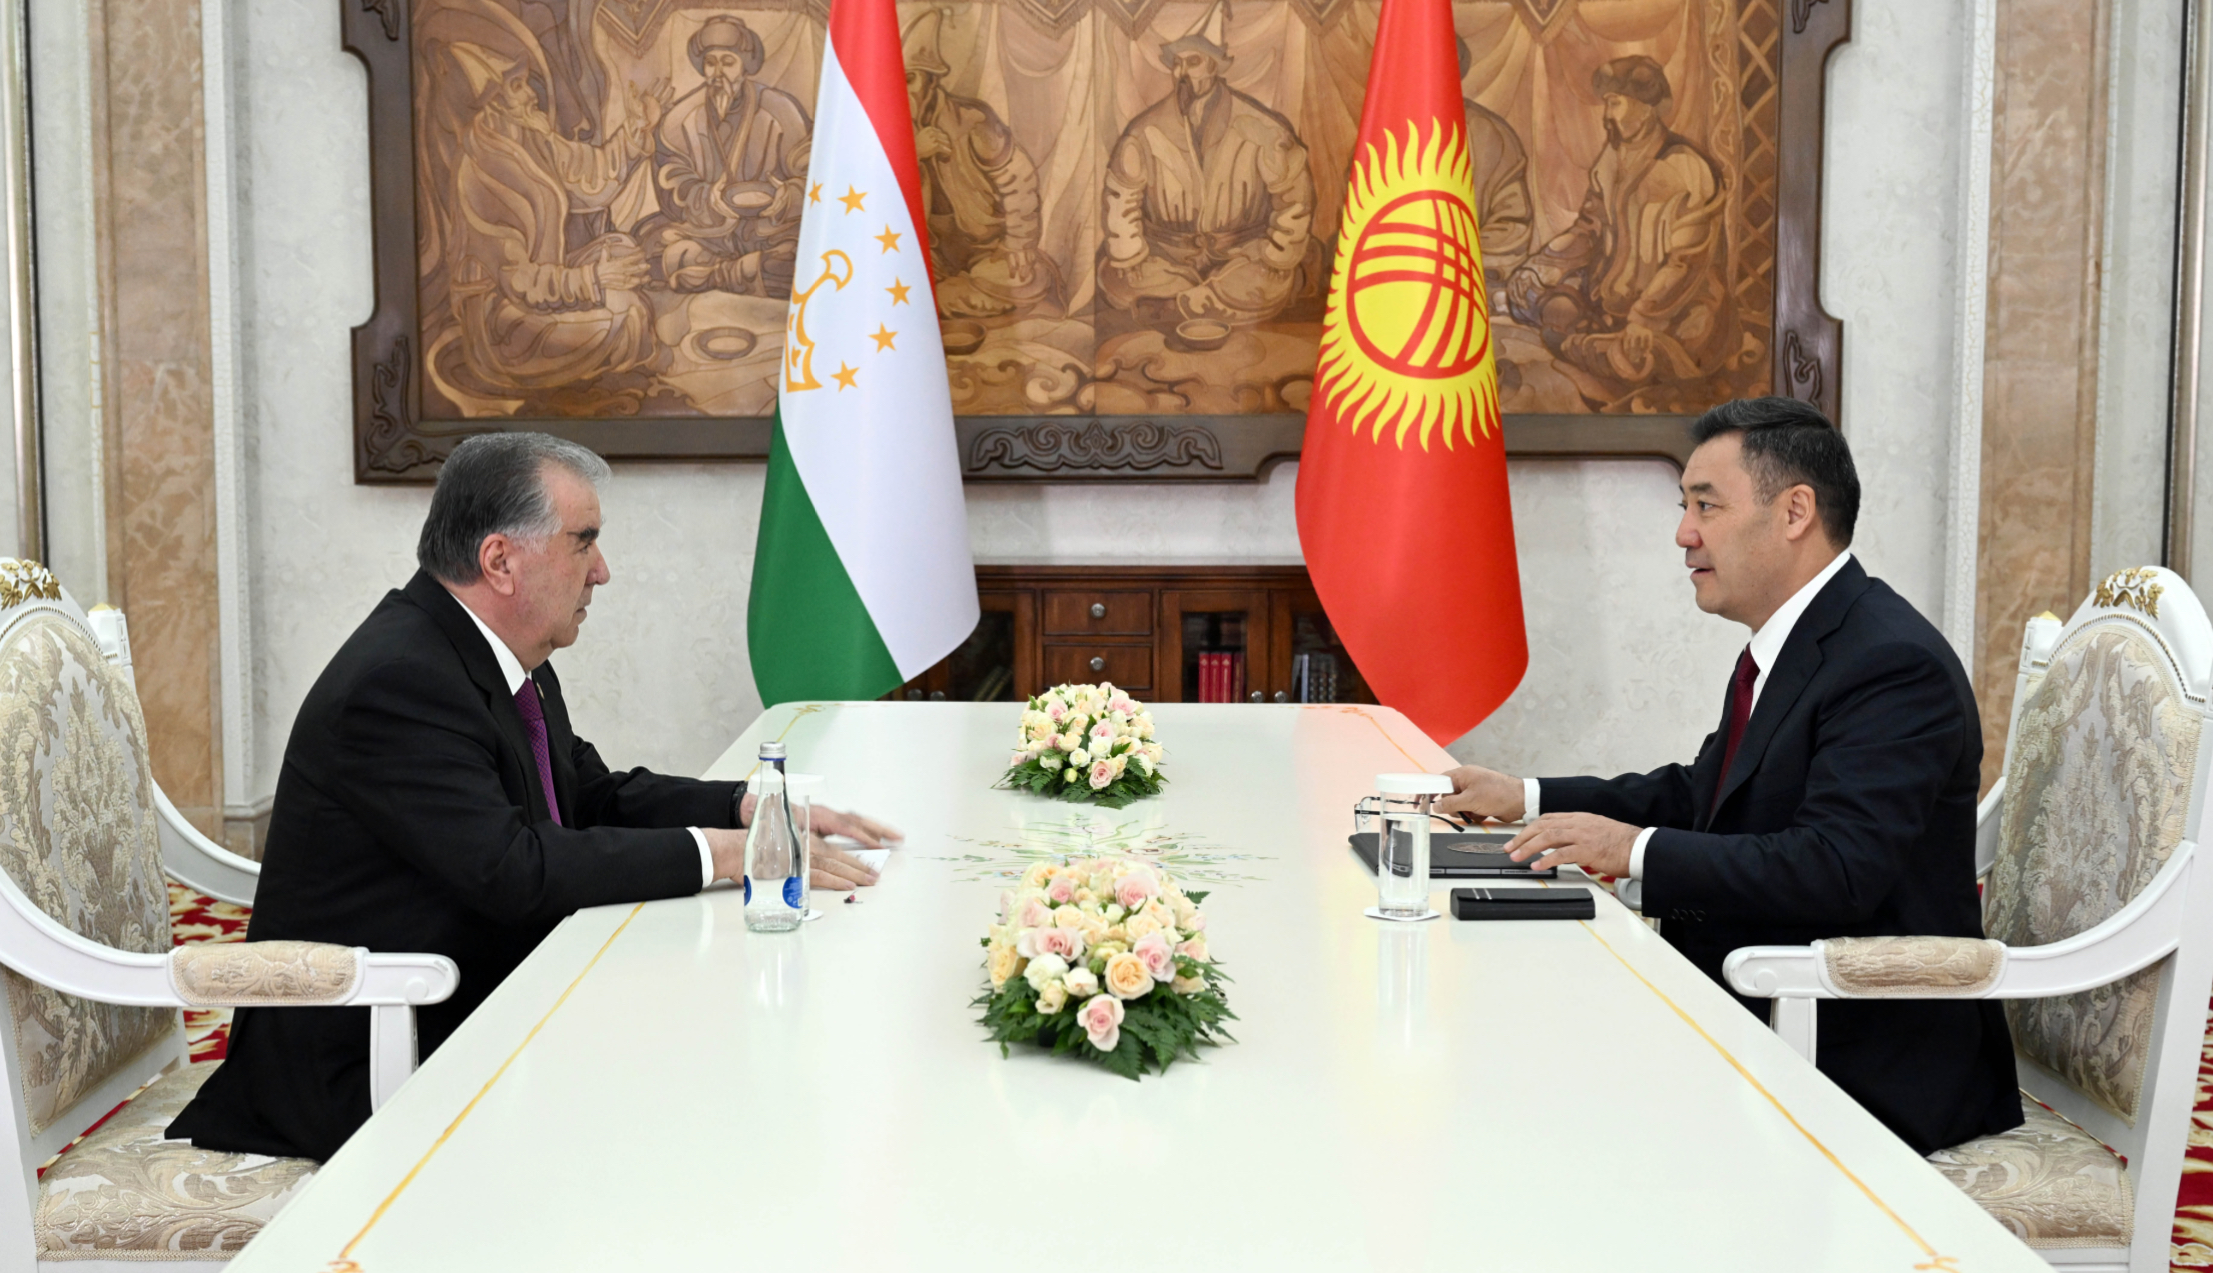 Kyrgyzstan and Tajikistan presidents hold crucial talks at CIS meeting: border resolution tops agenda 